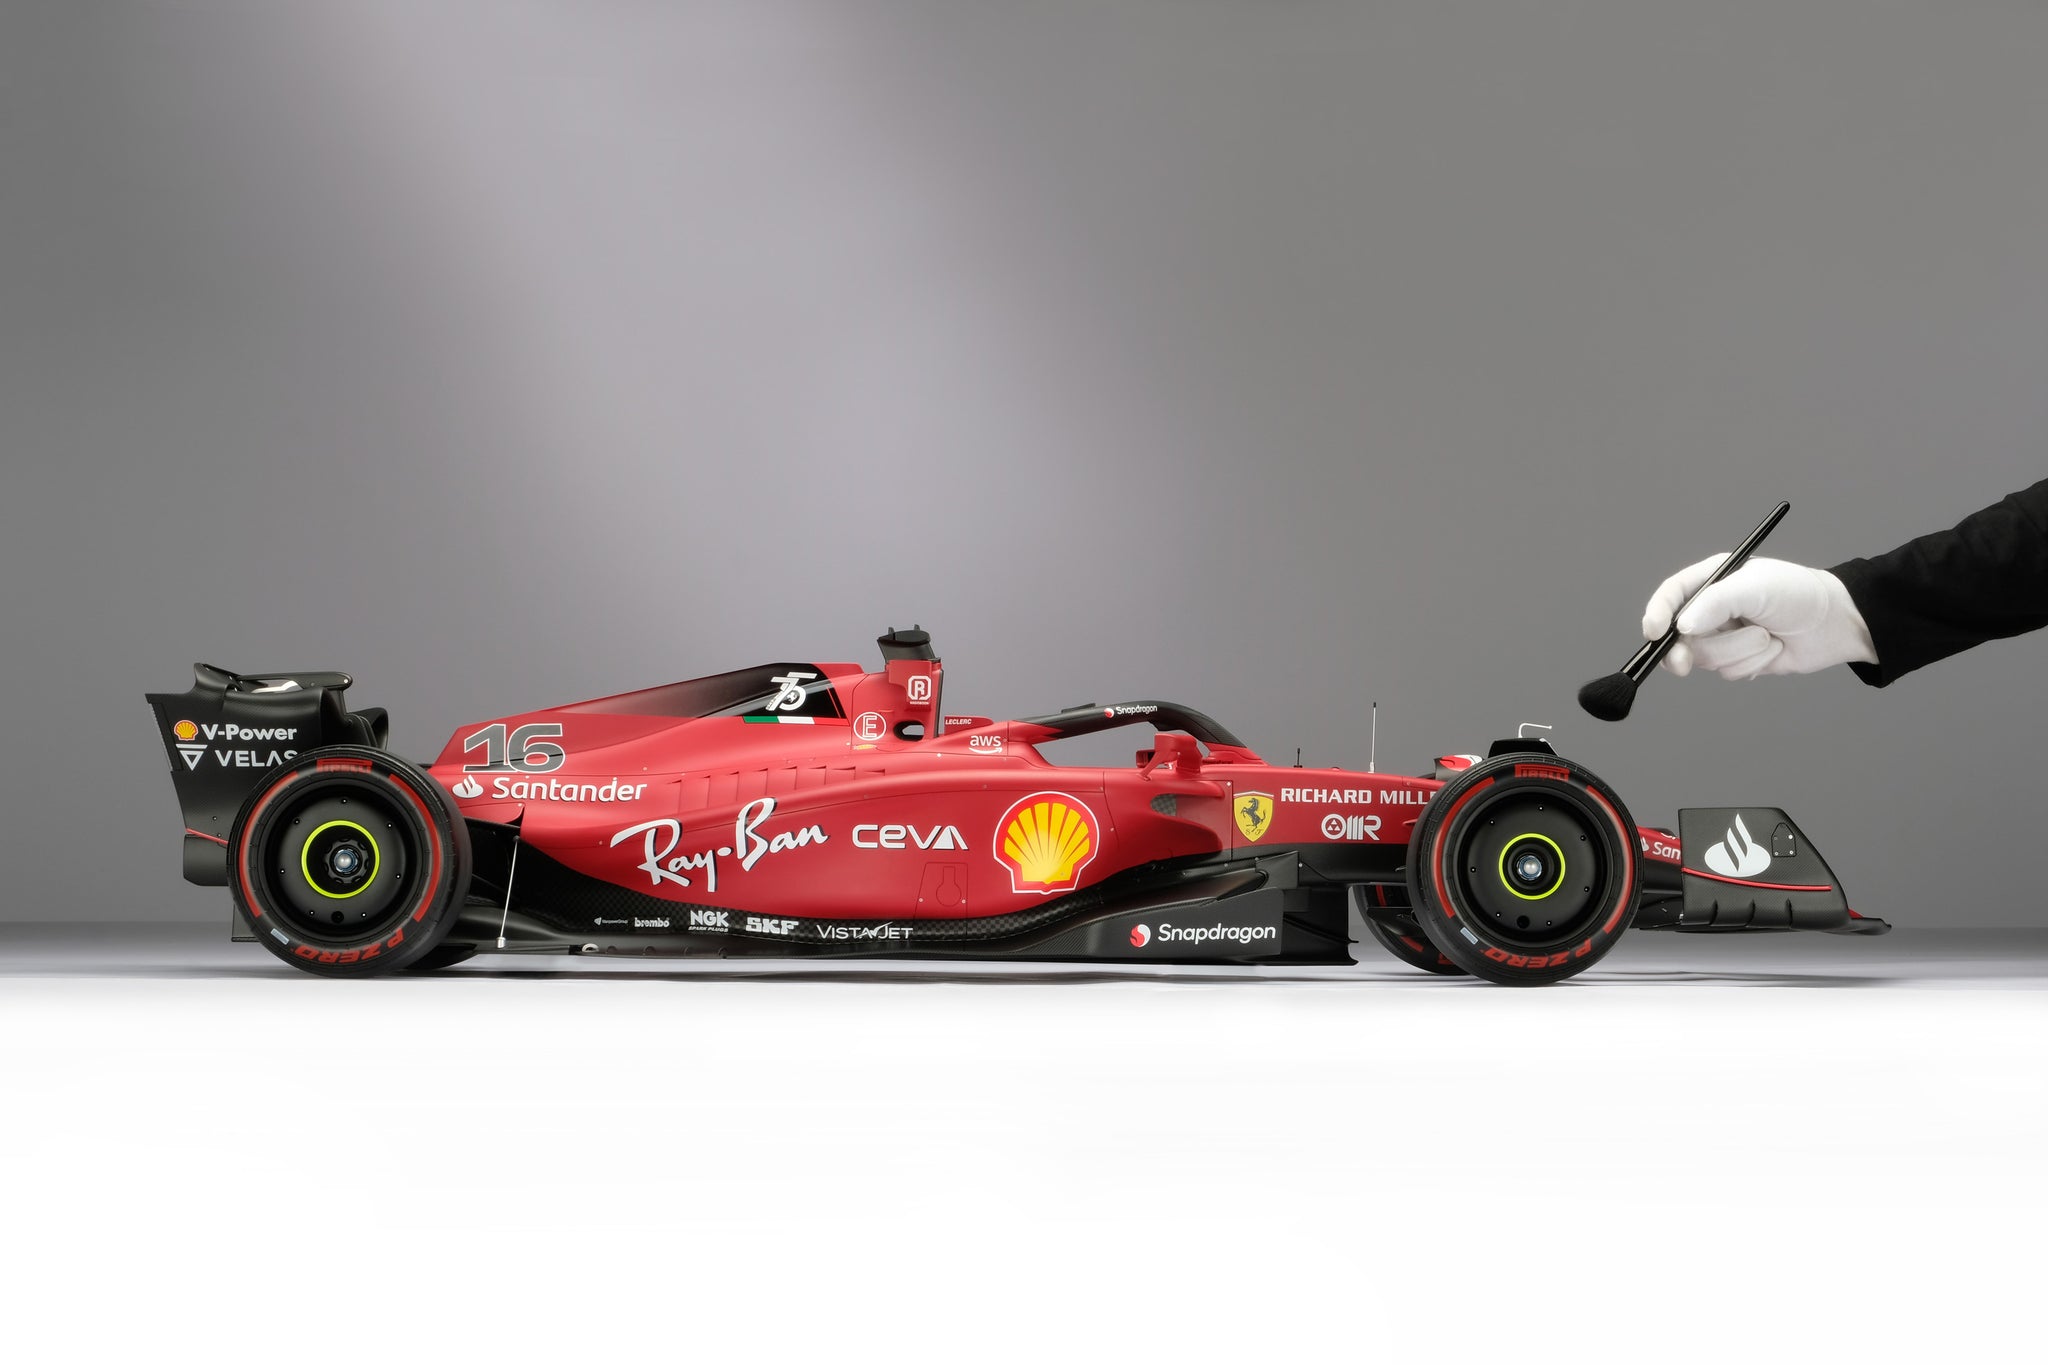 Ferrari F1-75 at 1:5 scale by Amalgam Collection